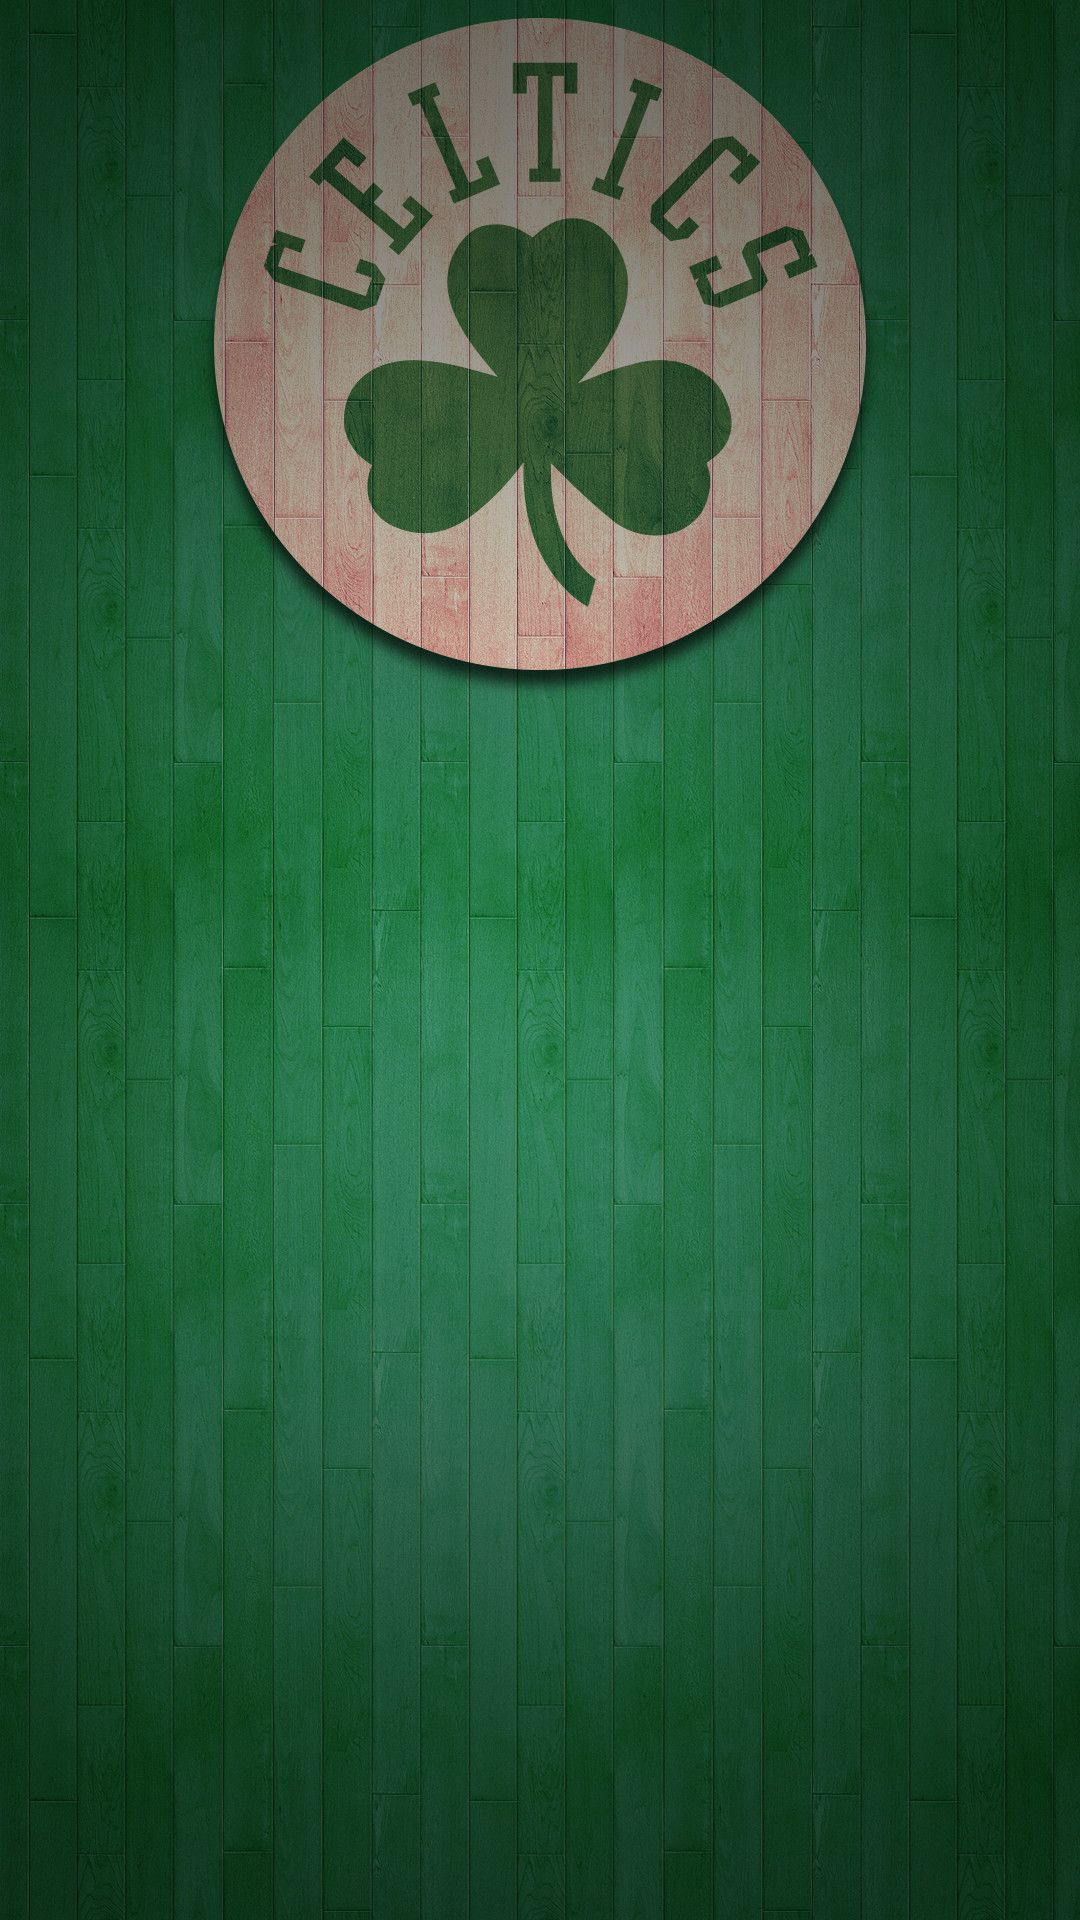 Boston Celtics 2017 Mobile home screen wallpaper